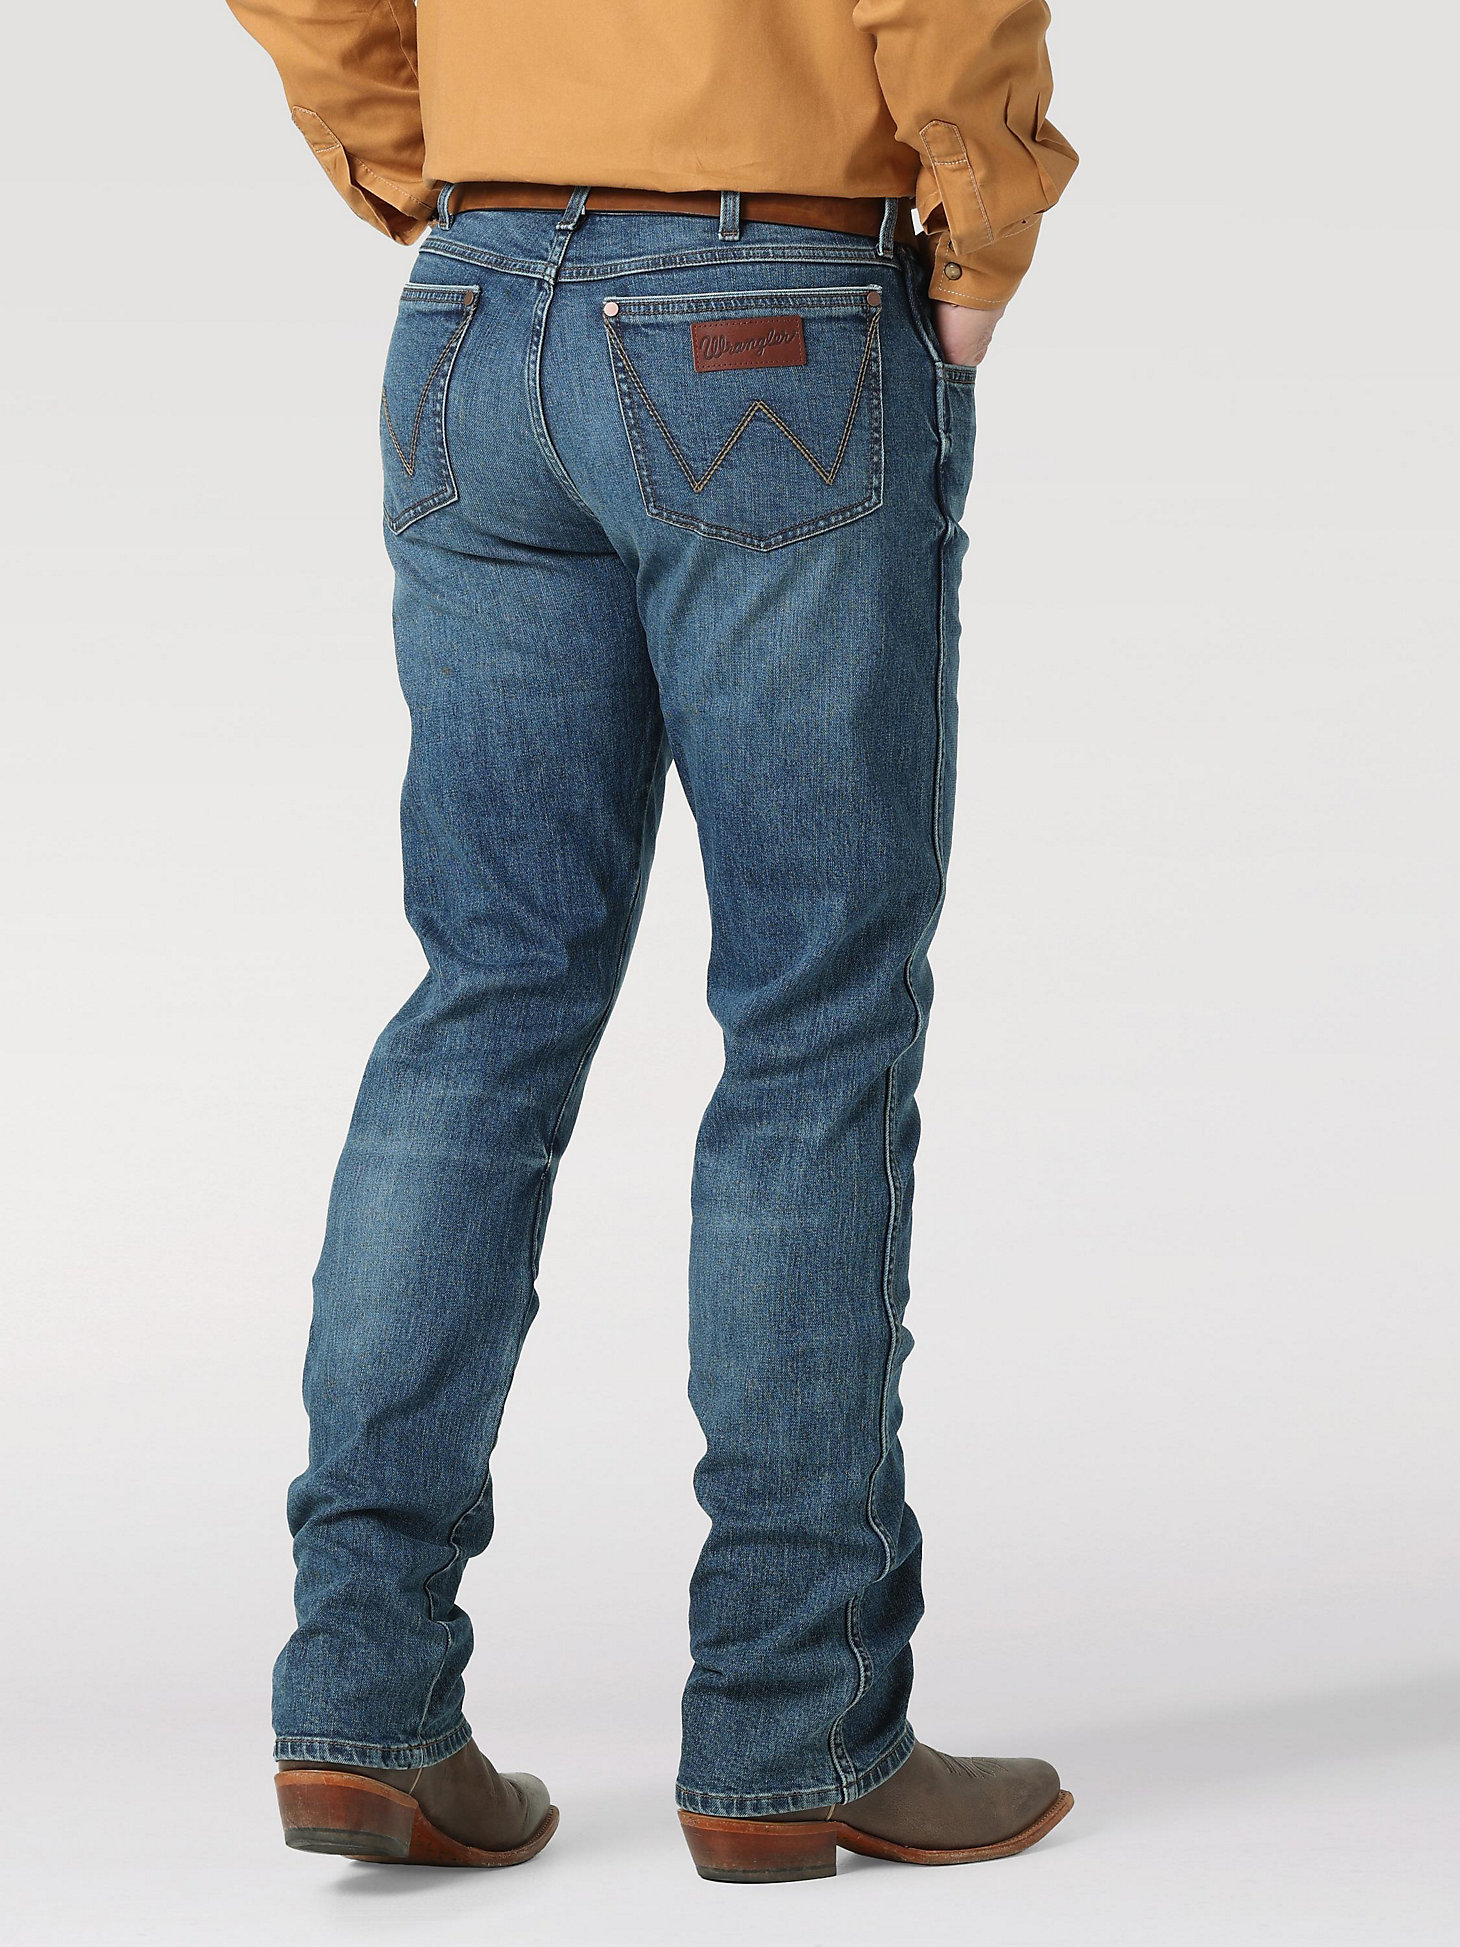 Men's Wrangler Retro® Slim Fit Straight Leg Jean in Ferris alternative view 2